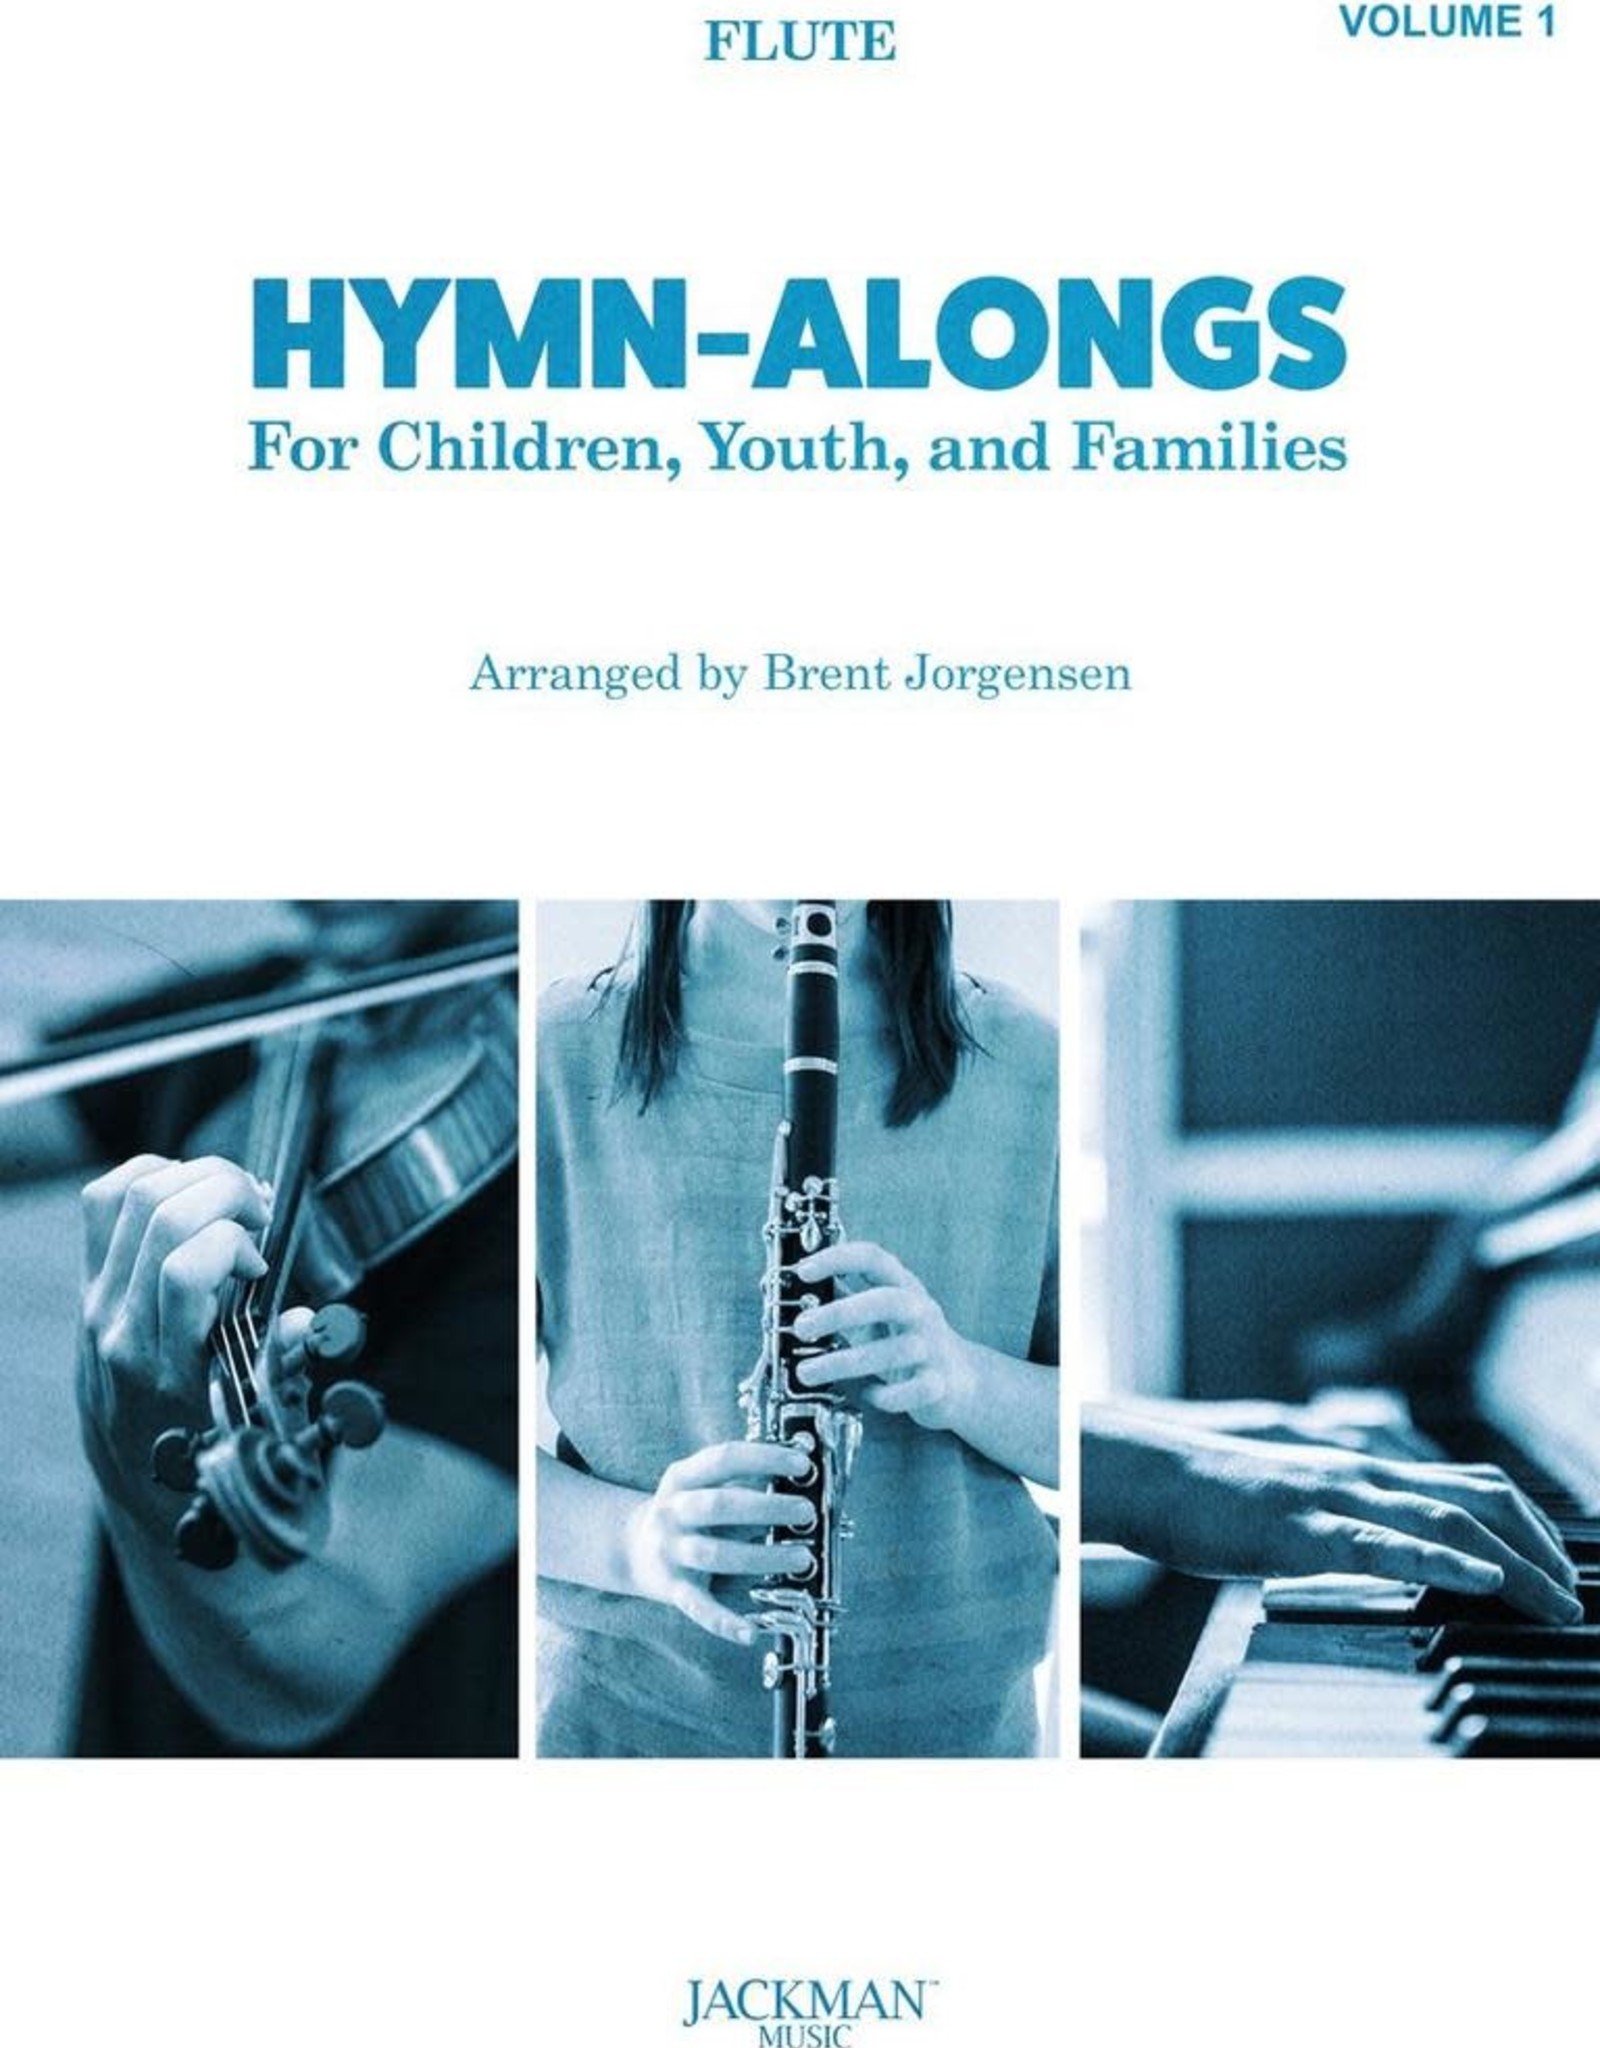 Jackman Music Hymn-Alongs Vol. 1 - arr. Brent Jorgensen - Flute